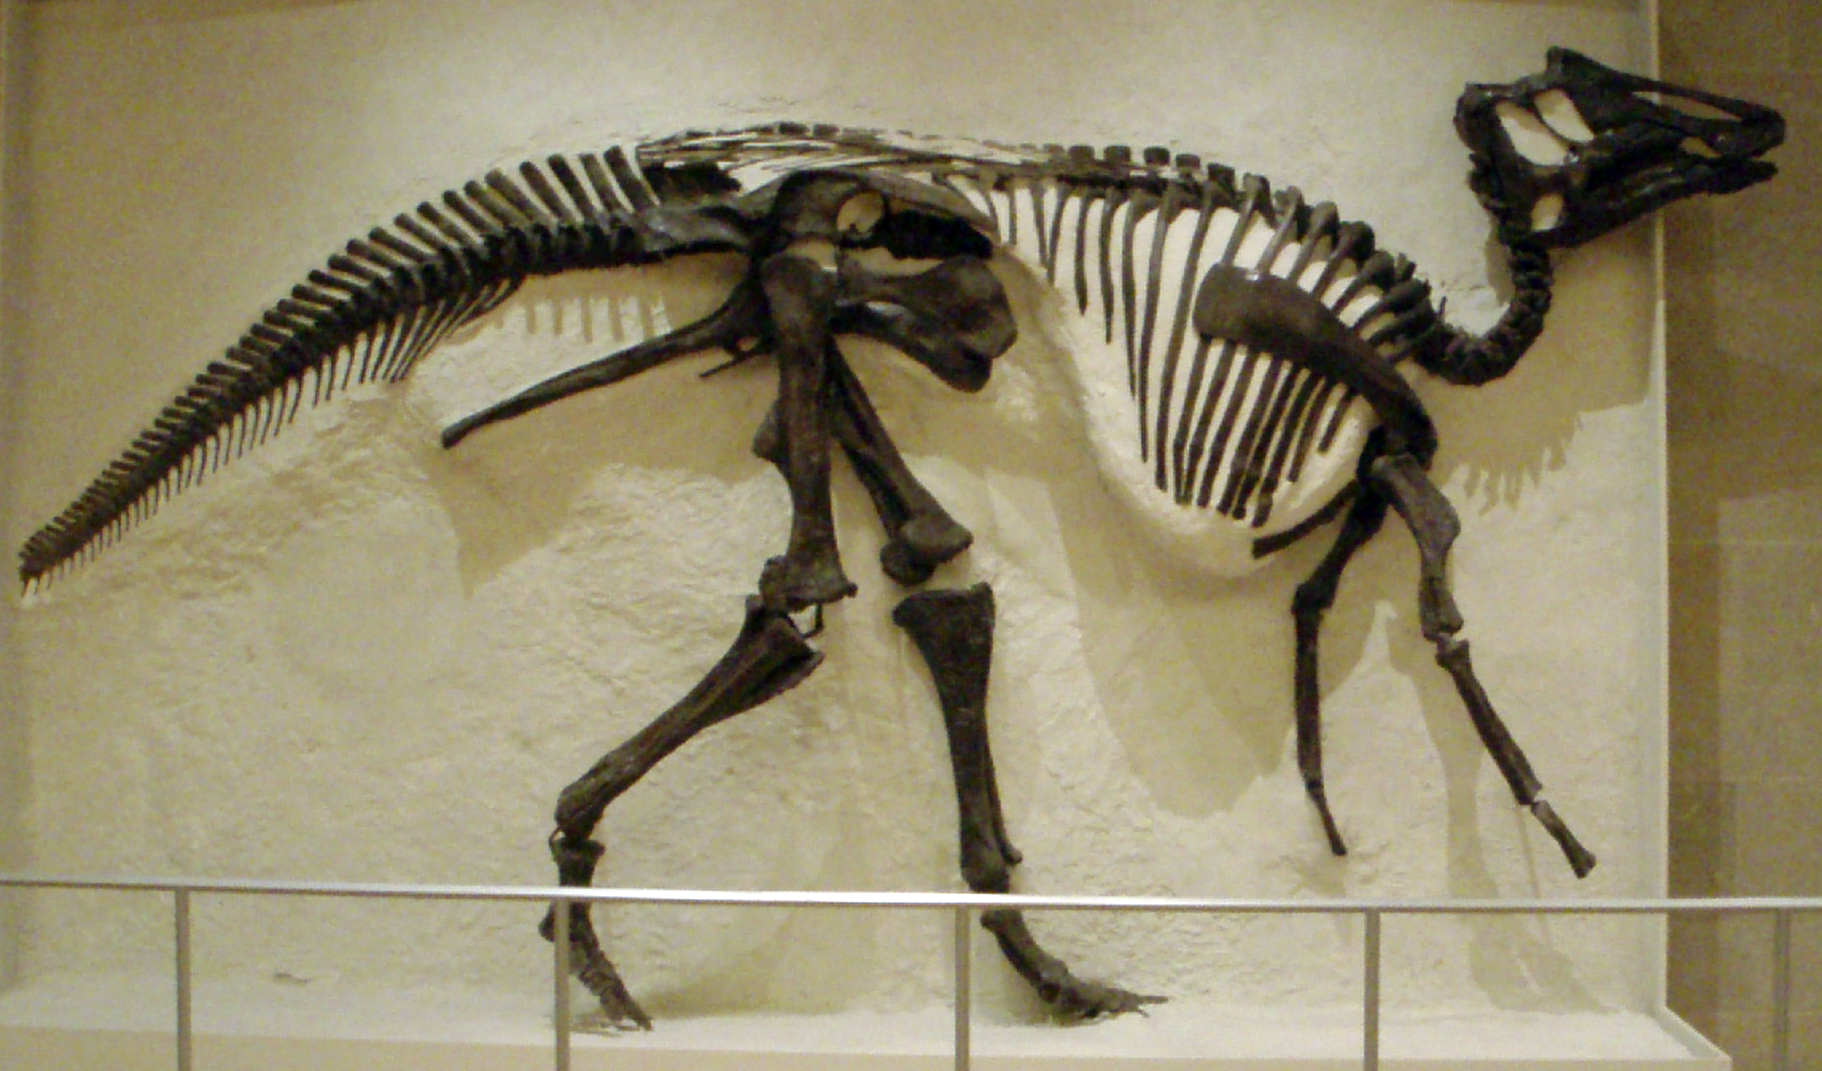 https://upload.wikimedia.org/wikipedia/commons/8/8f/ROM-HadrosaurSkeleton.png